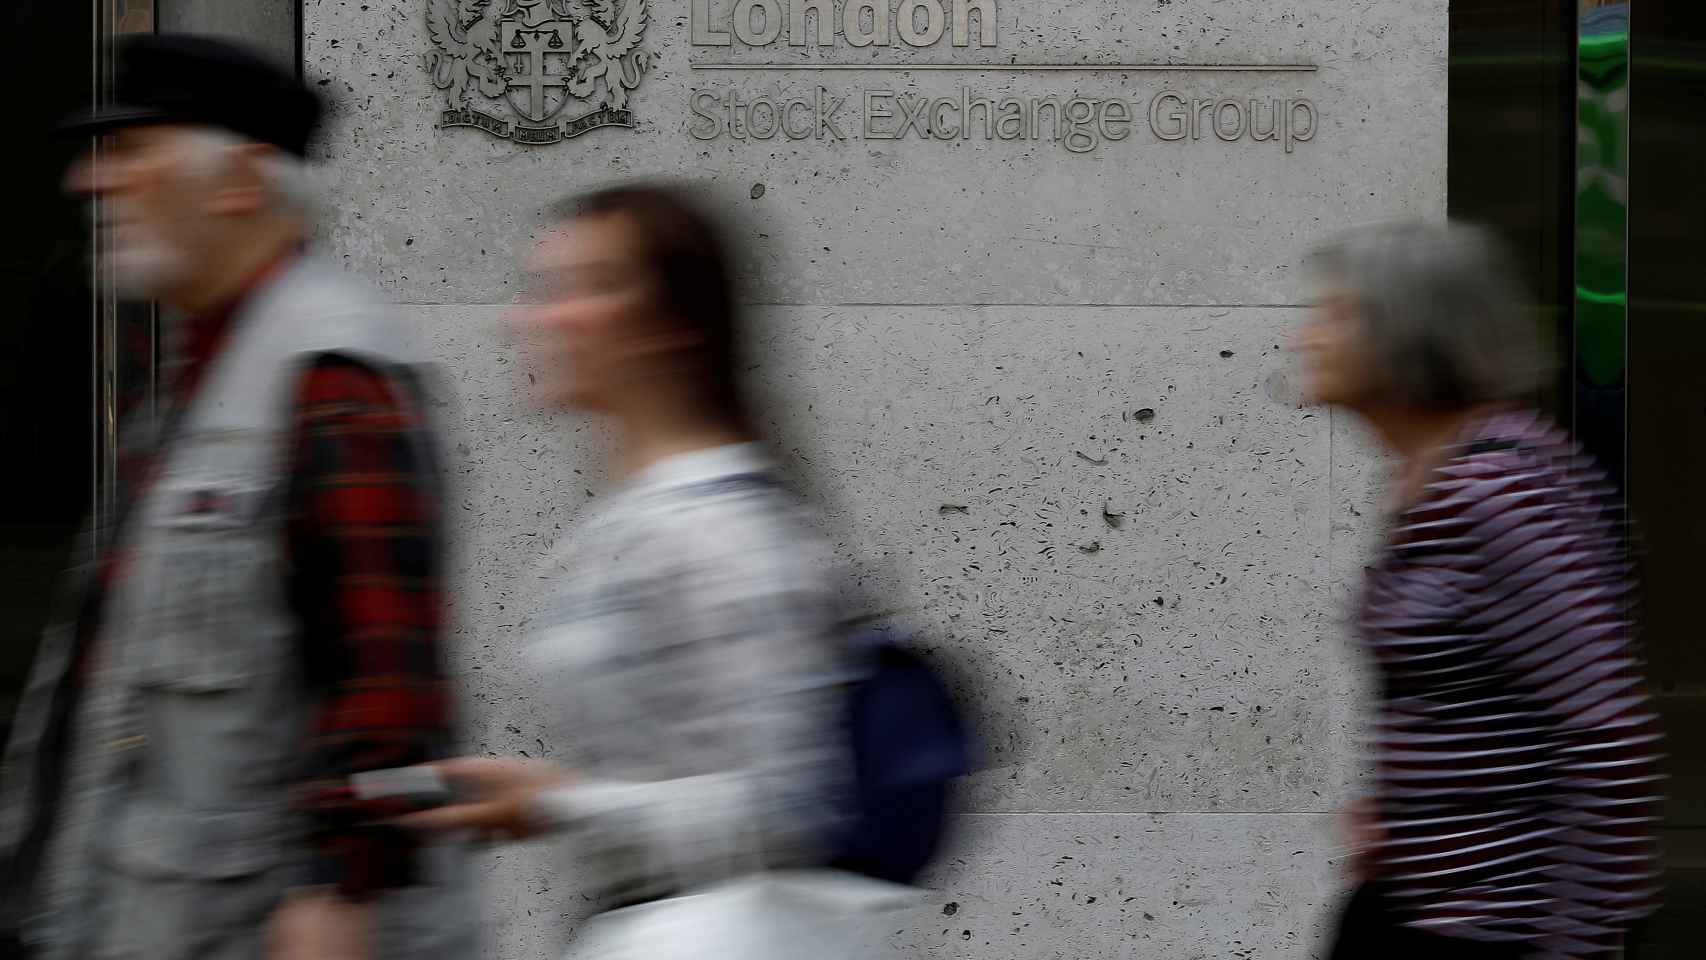 Personas pasan frente a la Bolsa de Londres